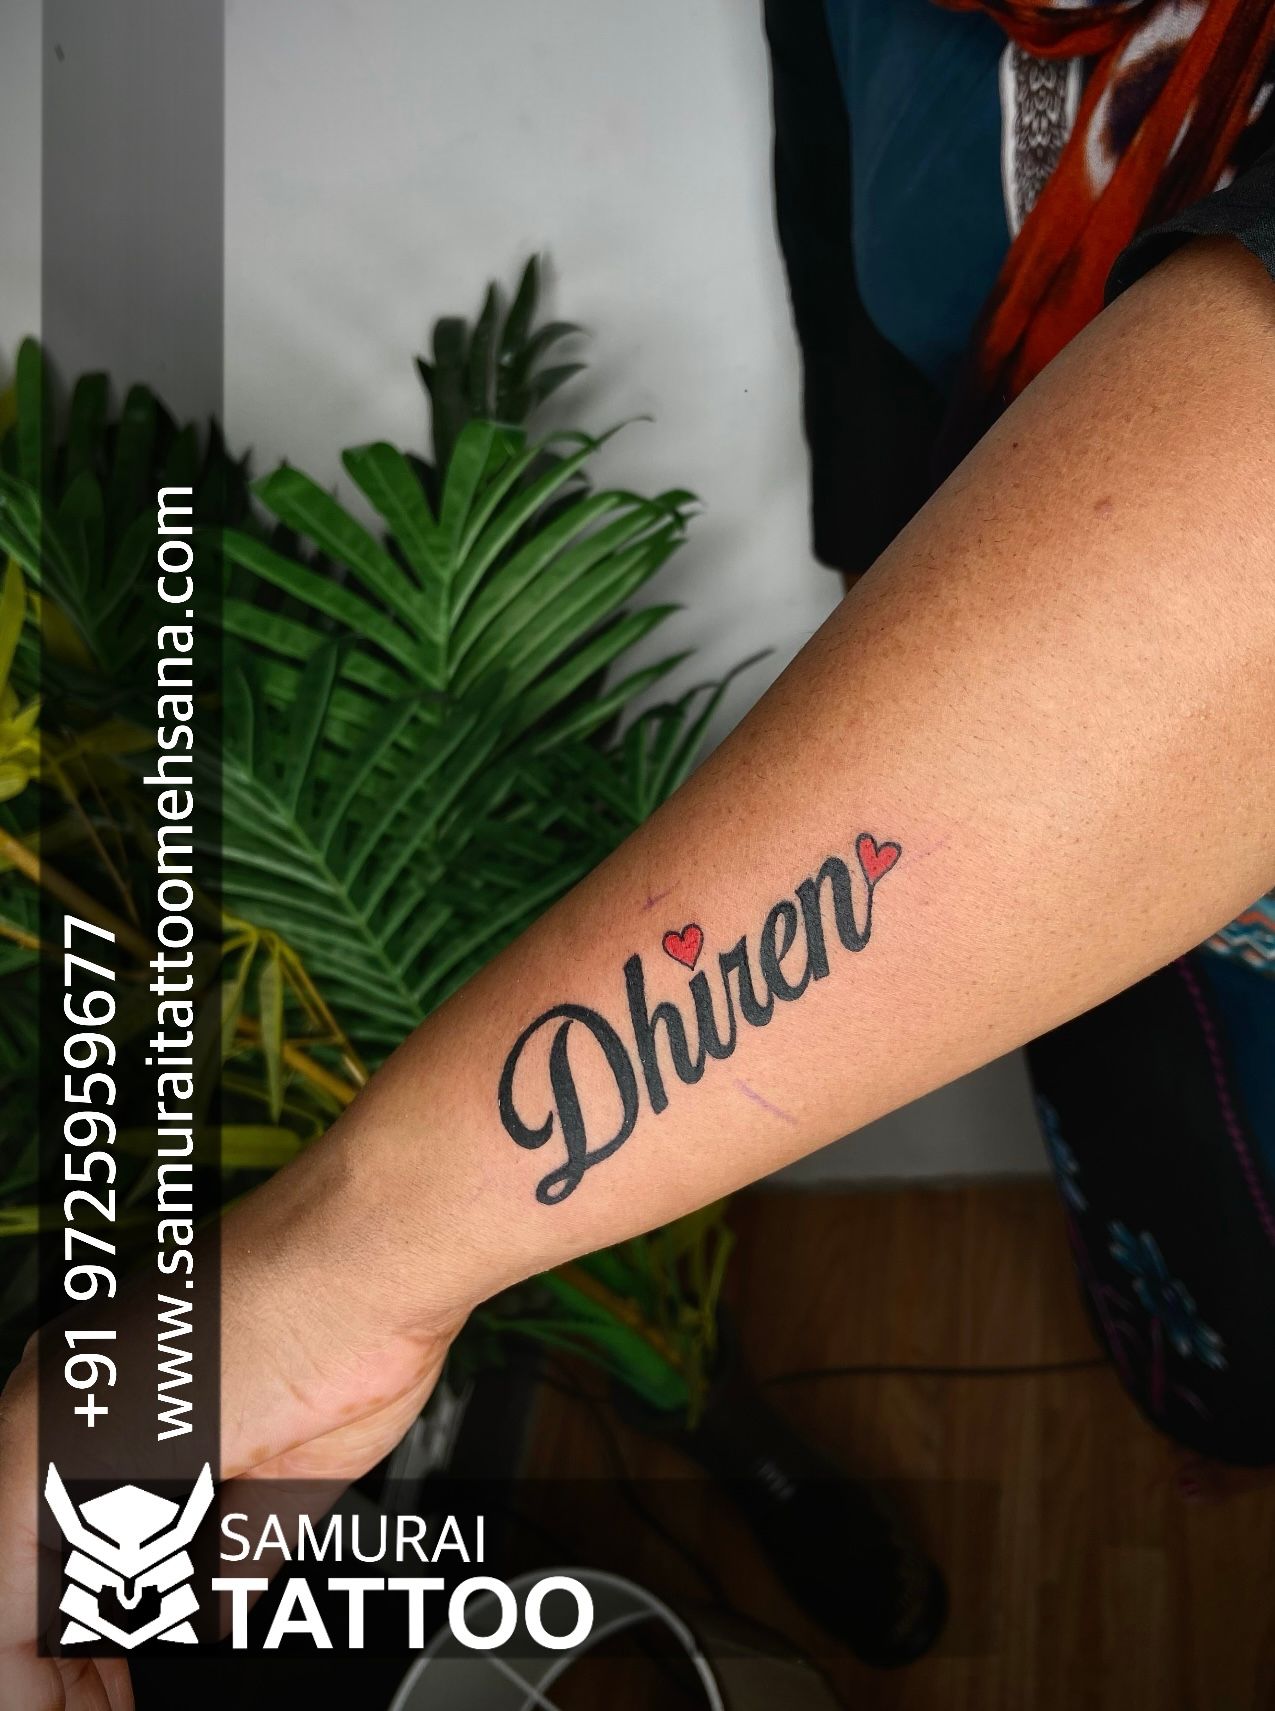 Tattoo uploaded by Vipul Chaudhary • dhruv name tattoo |Dhruv name tattoo  ideas |Dhruv tattoo |Dhruv name tattoo design • Tattoodo